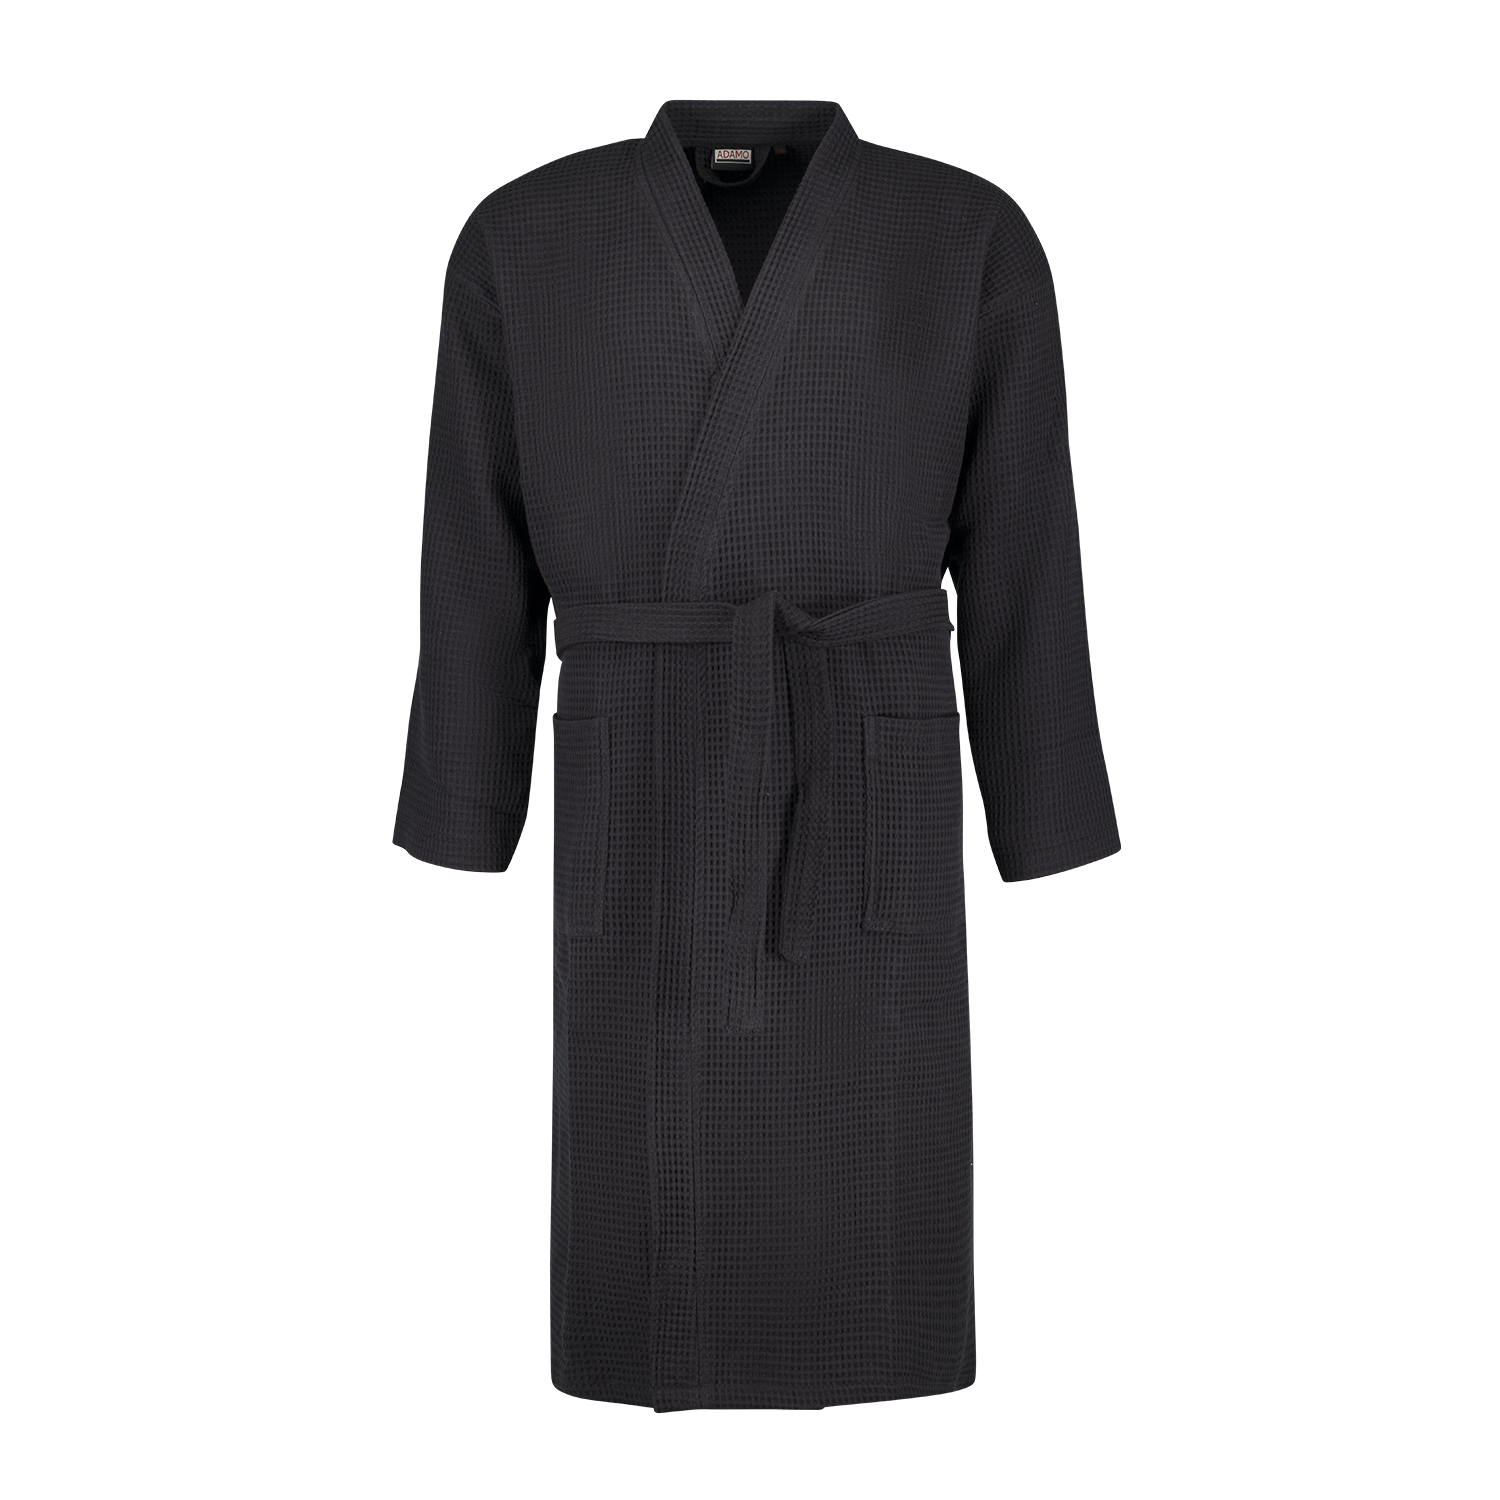 ADAMO bathrobe model "Joey" in oversizes 2XL-12XL for men